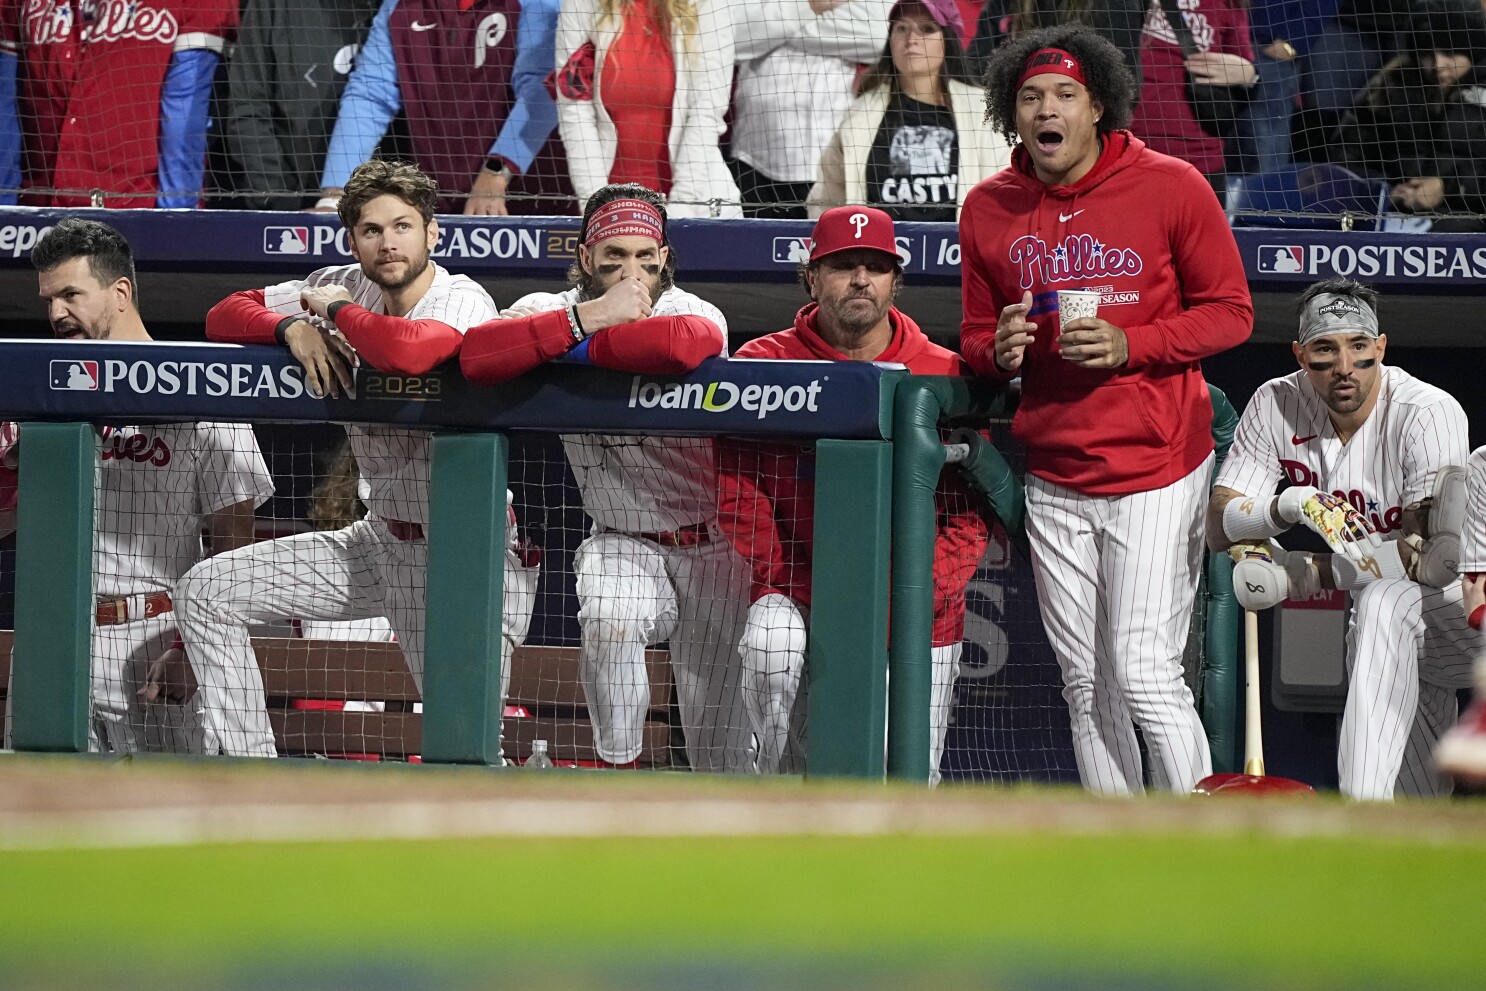 Bryce Harper's hot bat big reason Phillies in World Series